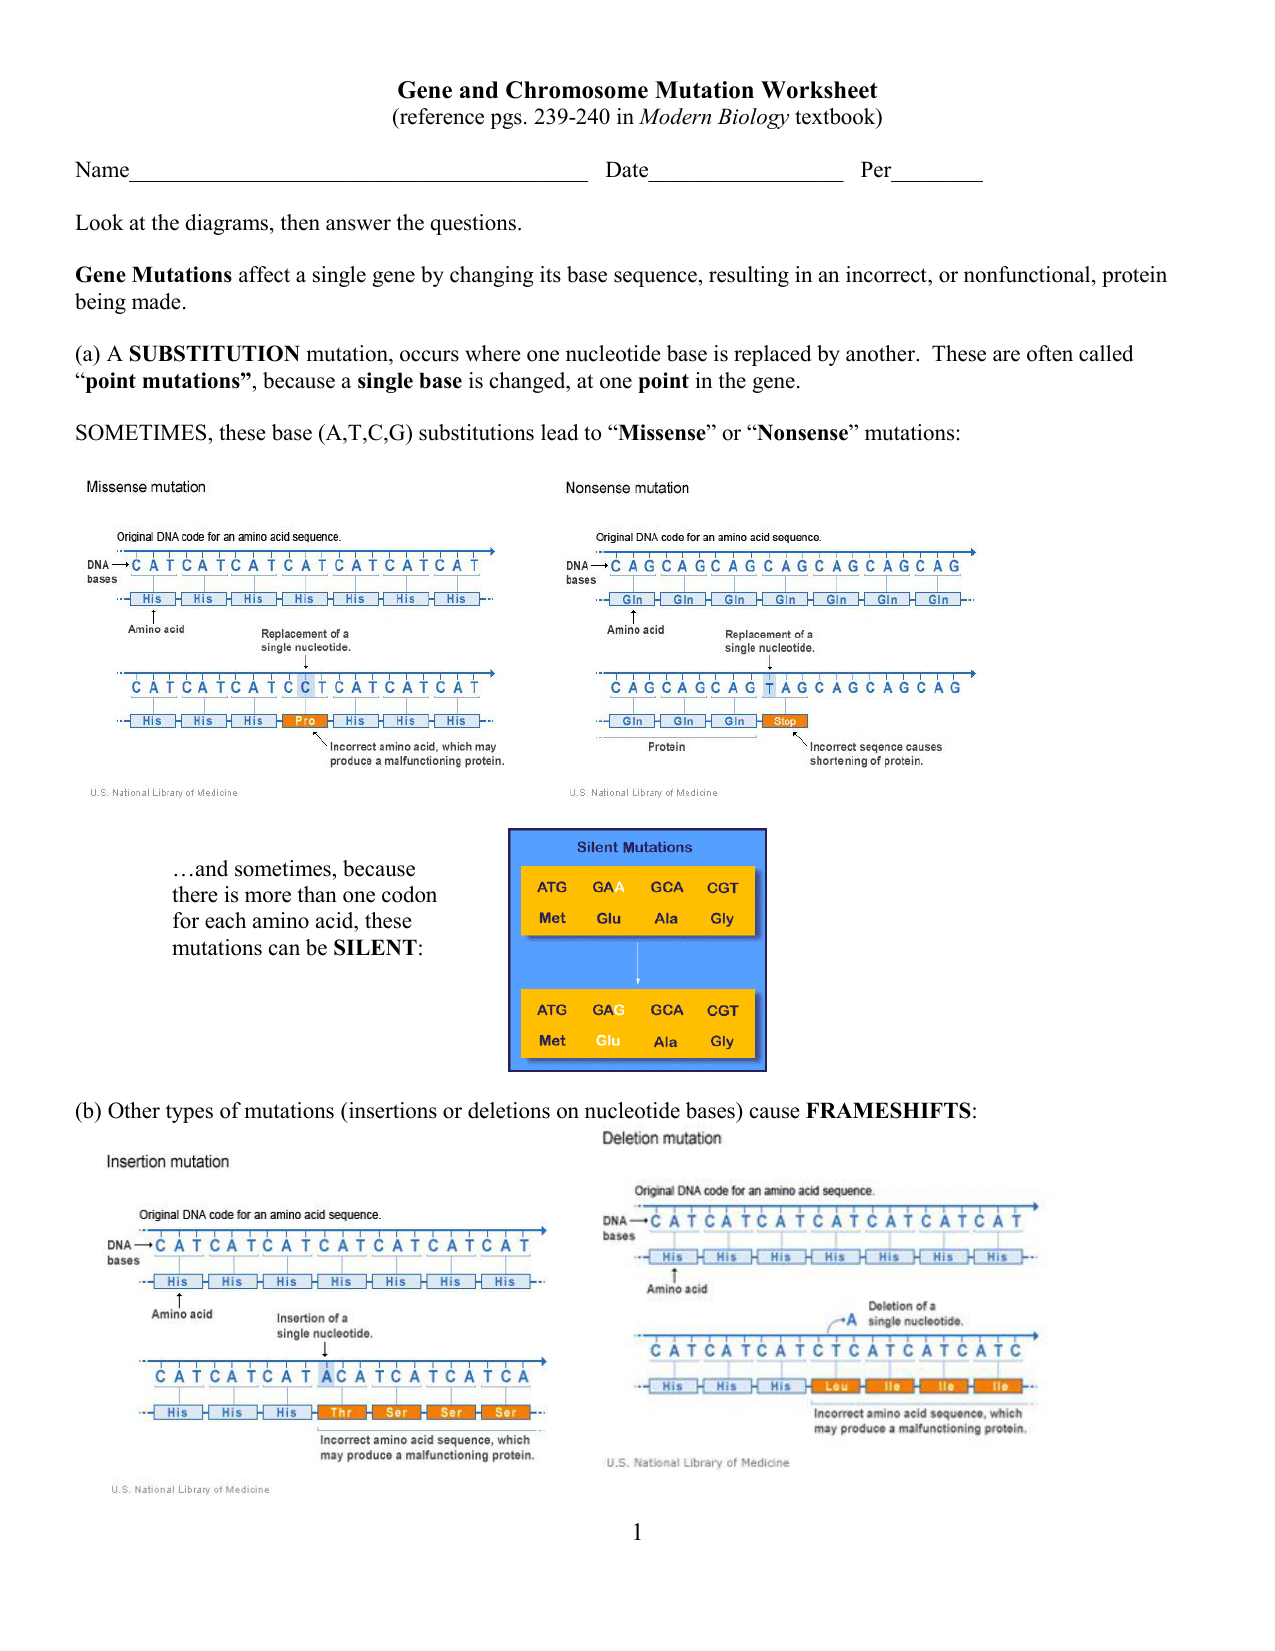 Genetic Mutation Worksheet - Westgate Mennonite Collegiate In Gene And Chromosome Mutation Worksheet